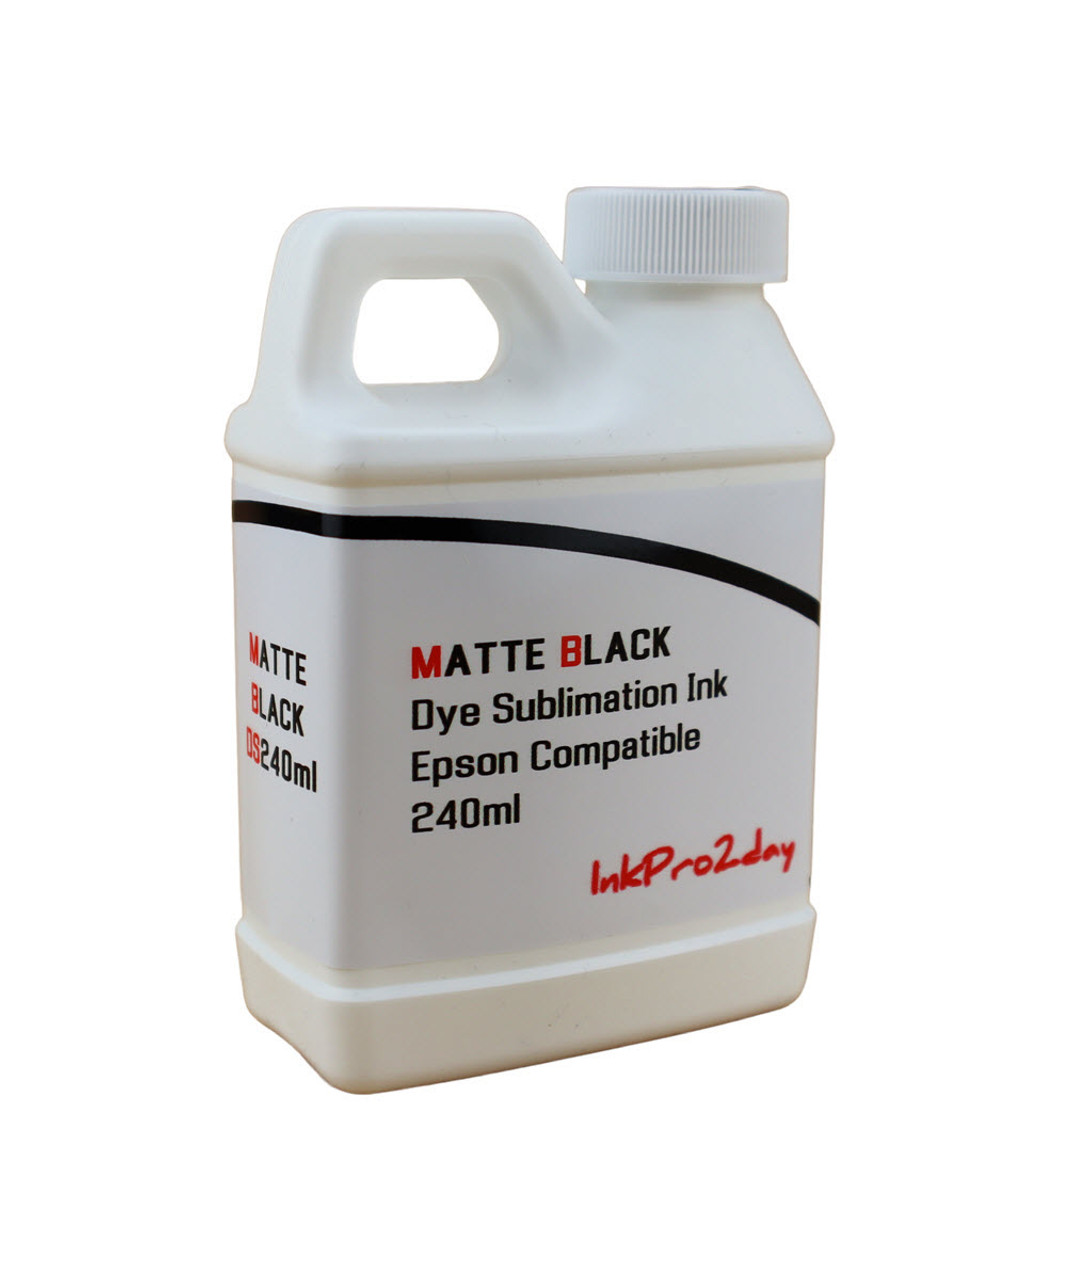 Matte Black Dye Sublimation Ink 240ml Bottle for Epson Stylus Pro 7800 9800 printers